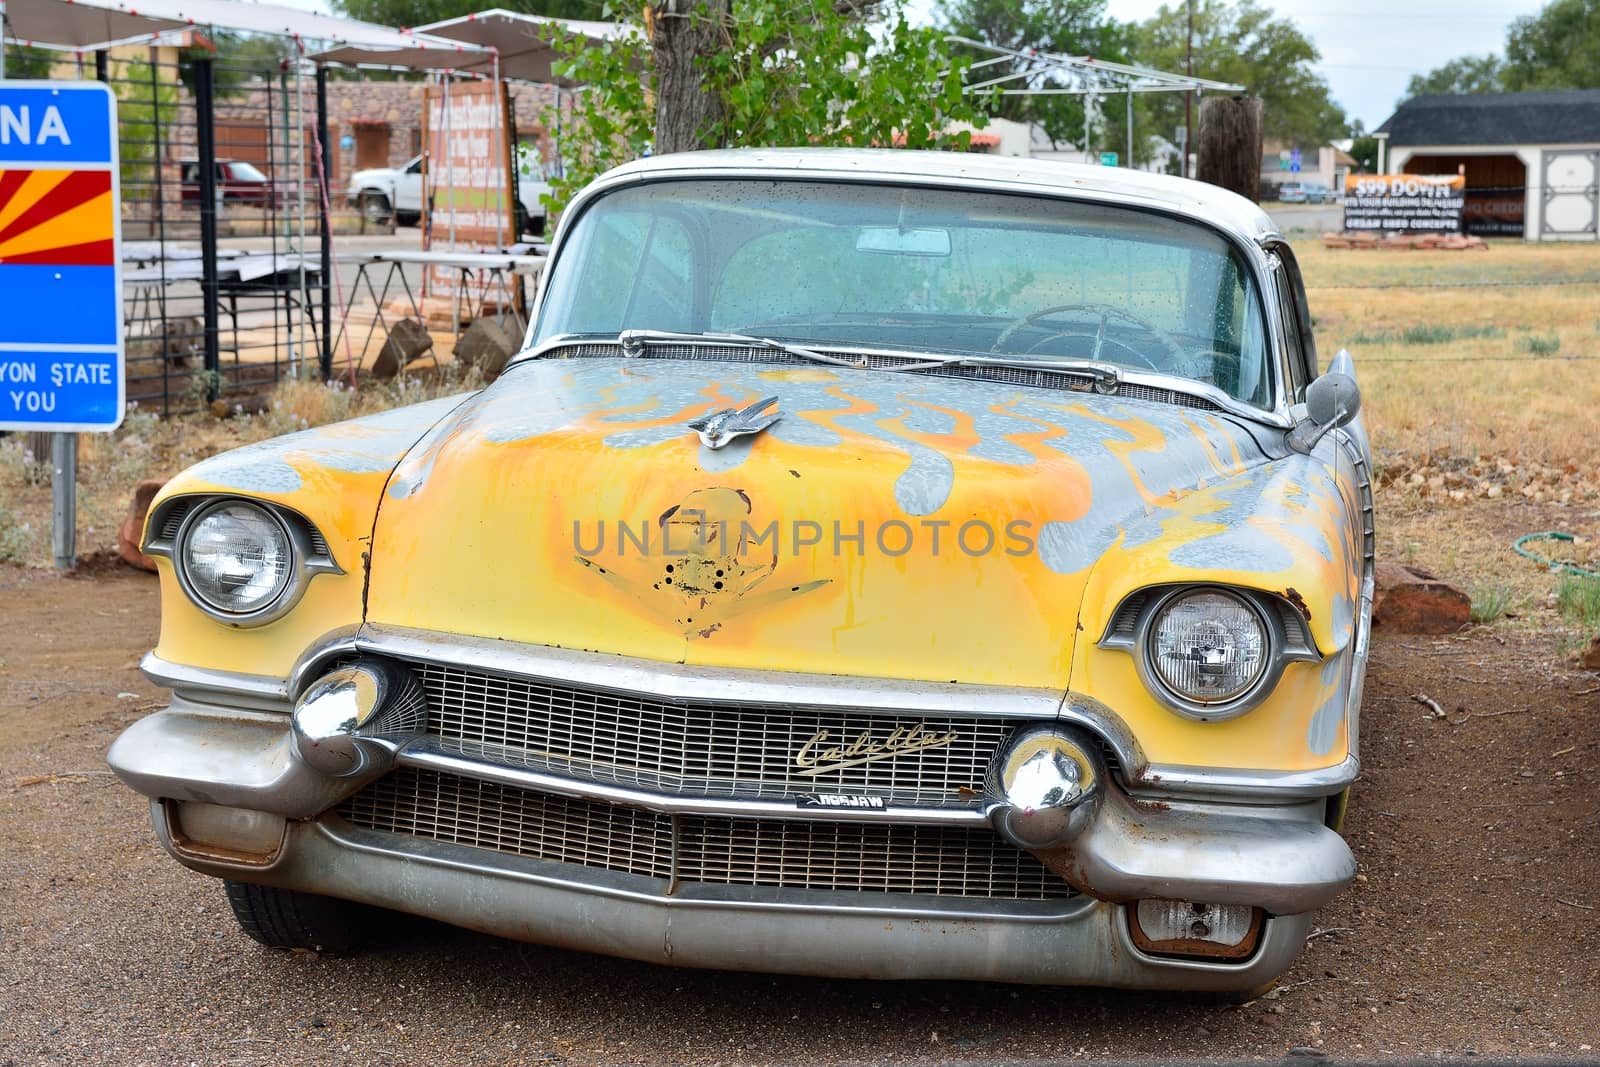 Seligman, Arizona, Usa Ð July 24, 2017: Rusty abandoned Cadillac car in Seligman, Arizona.